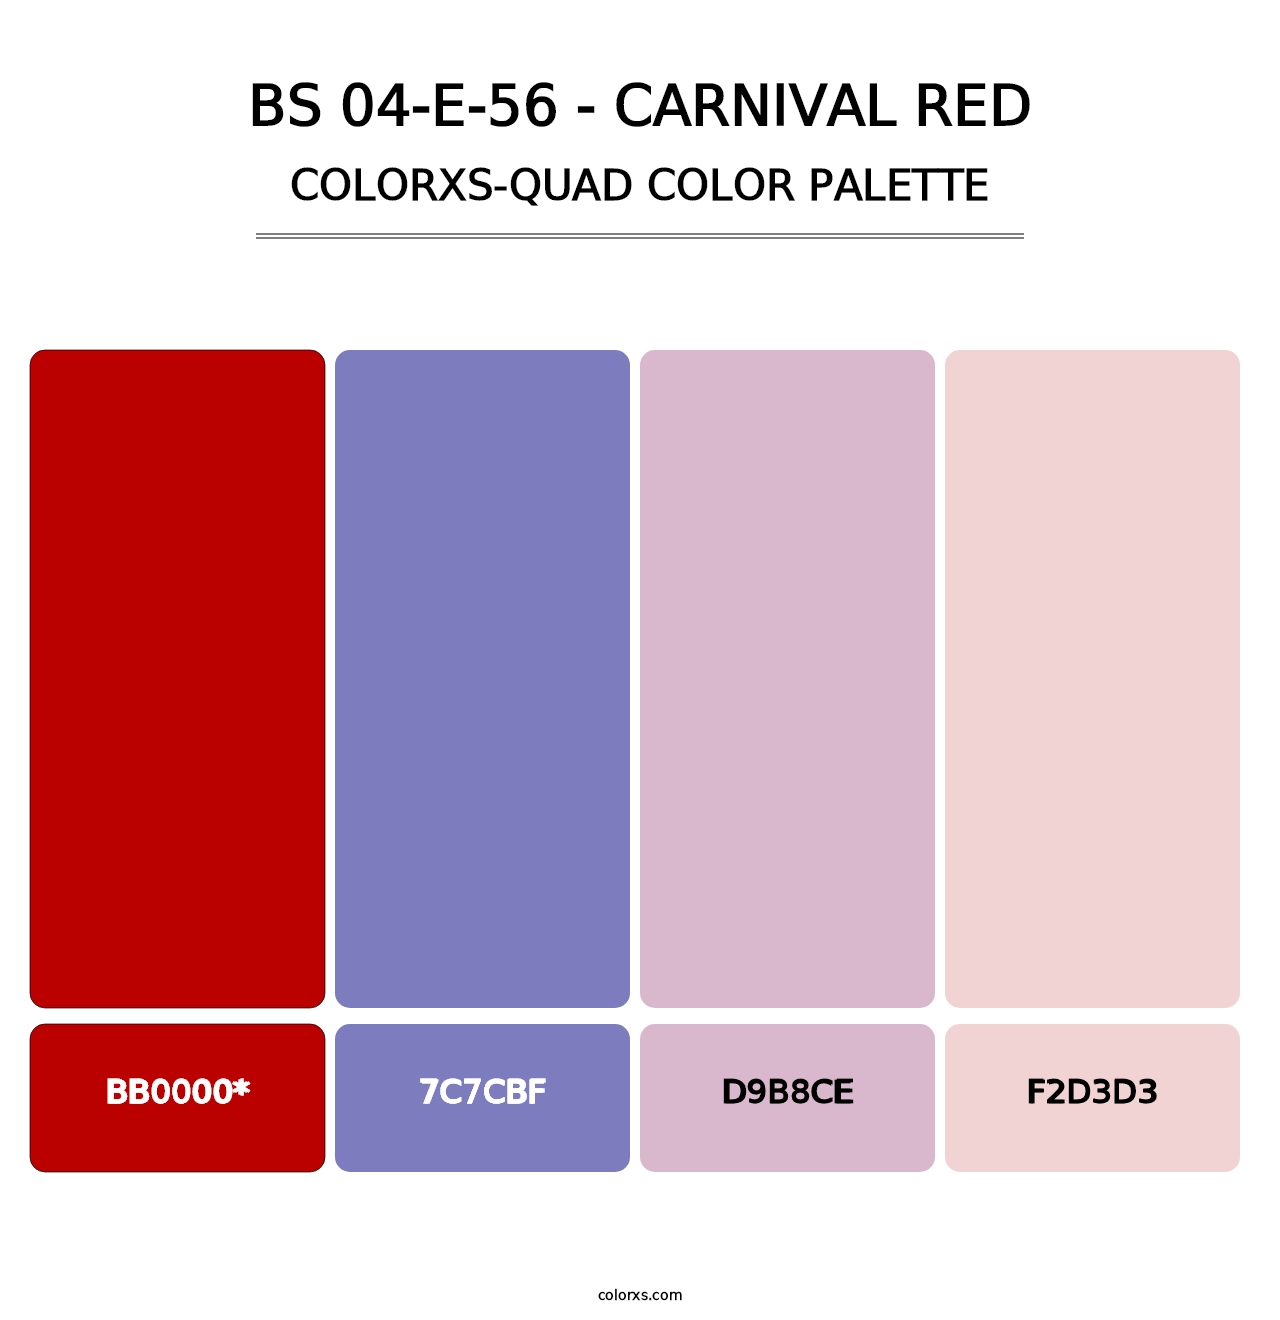 BS 04-E-56 - Carnival Red - Colorxs Quad Palette